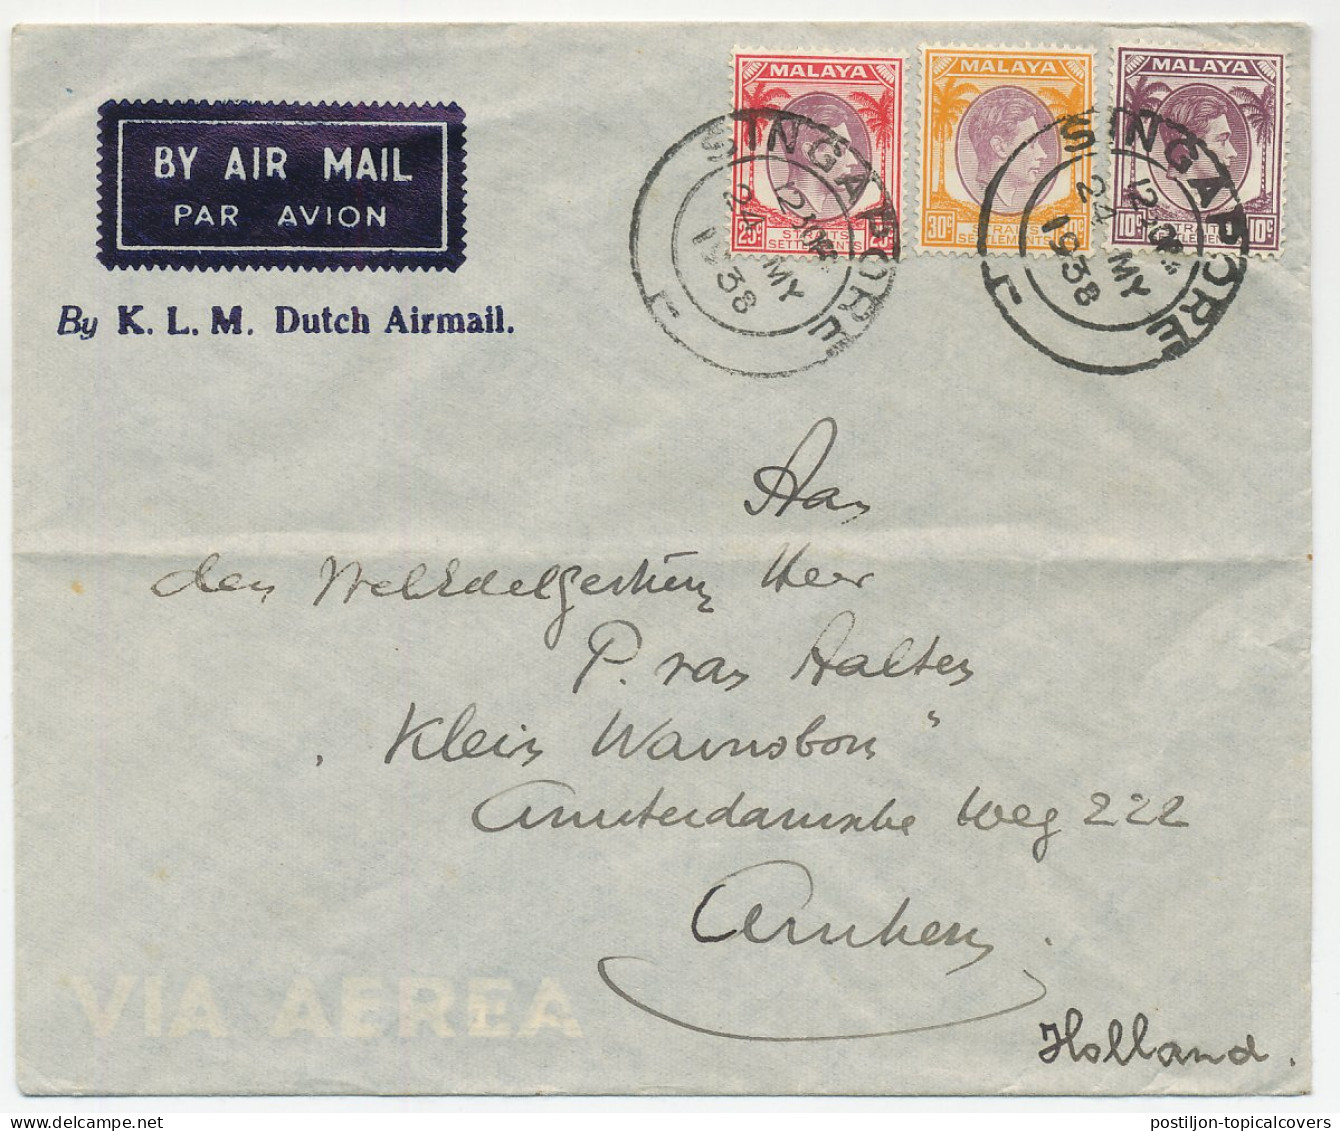  Cover / Postmark Singapore - Malaya - Netherlands 1938 By-KLM-Dutch-Airmail  - Vliegtuigen